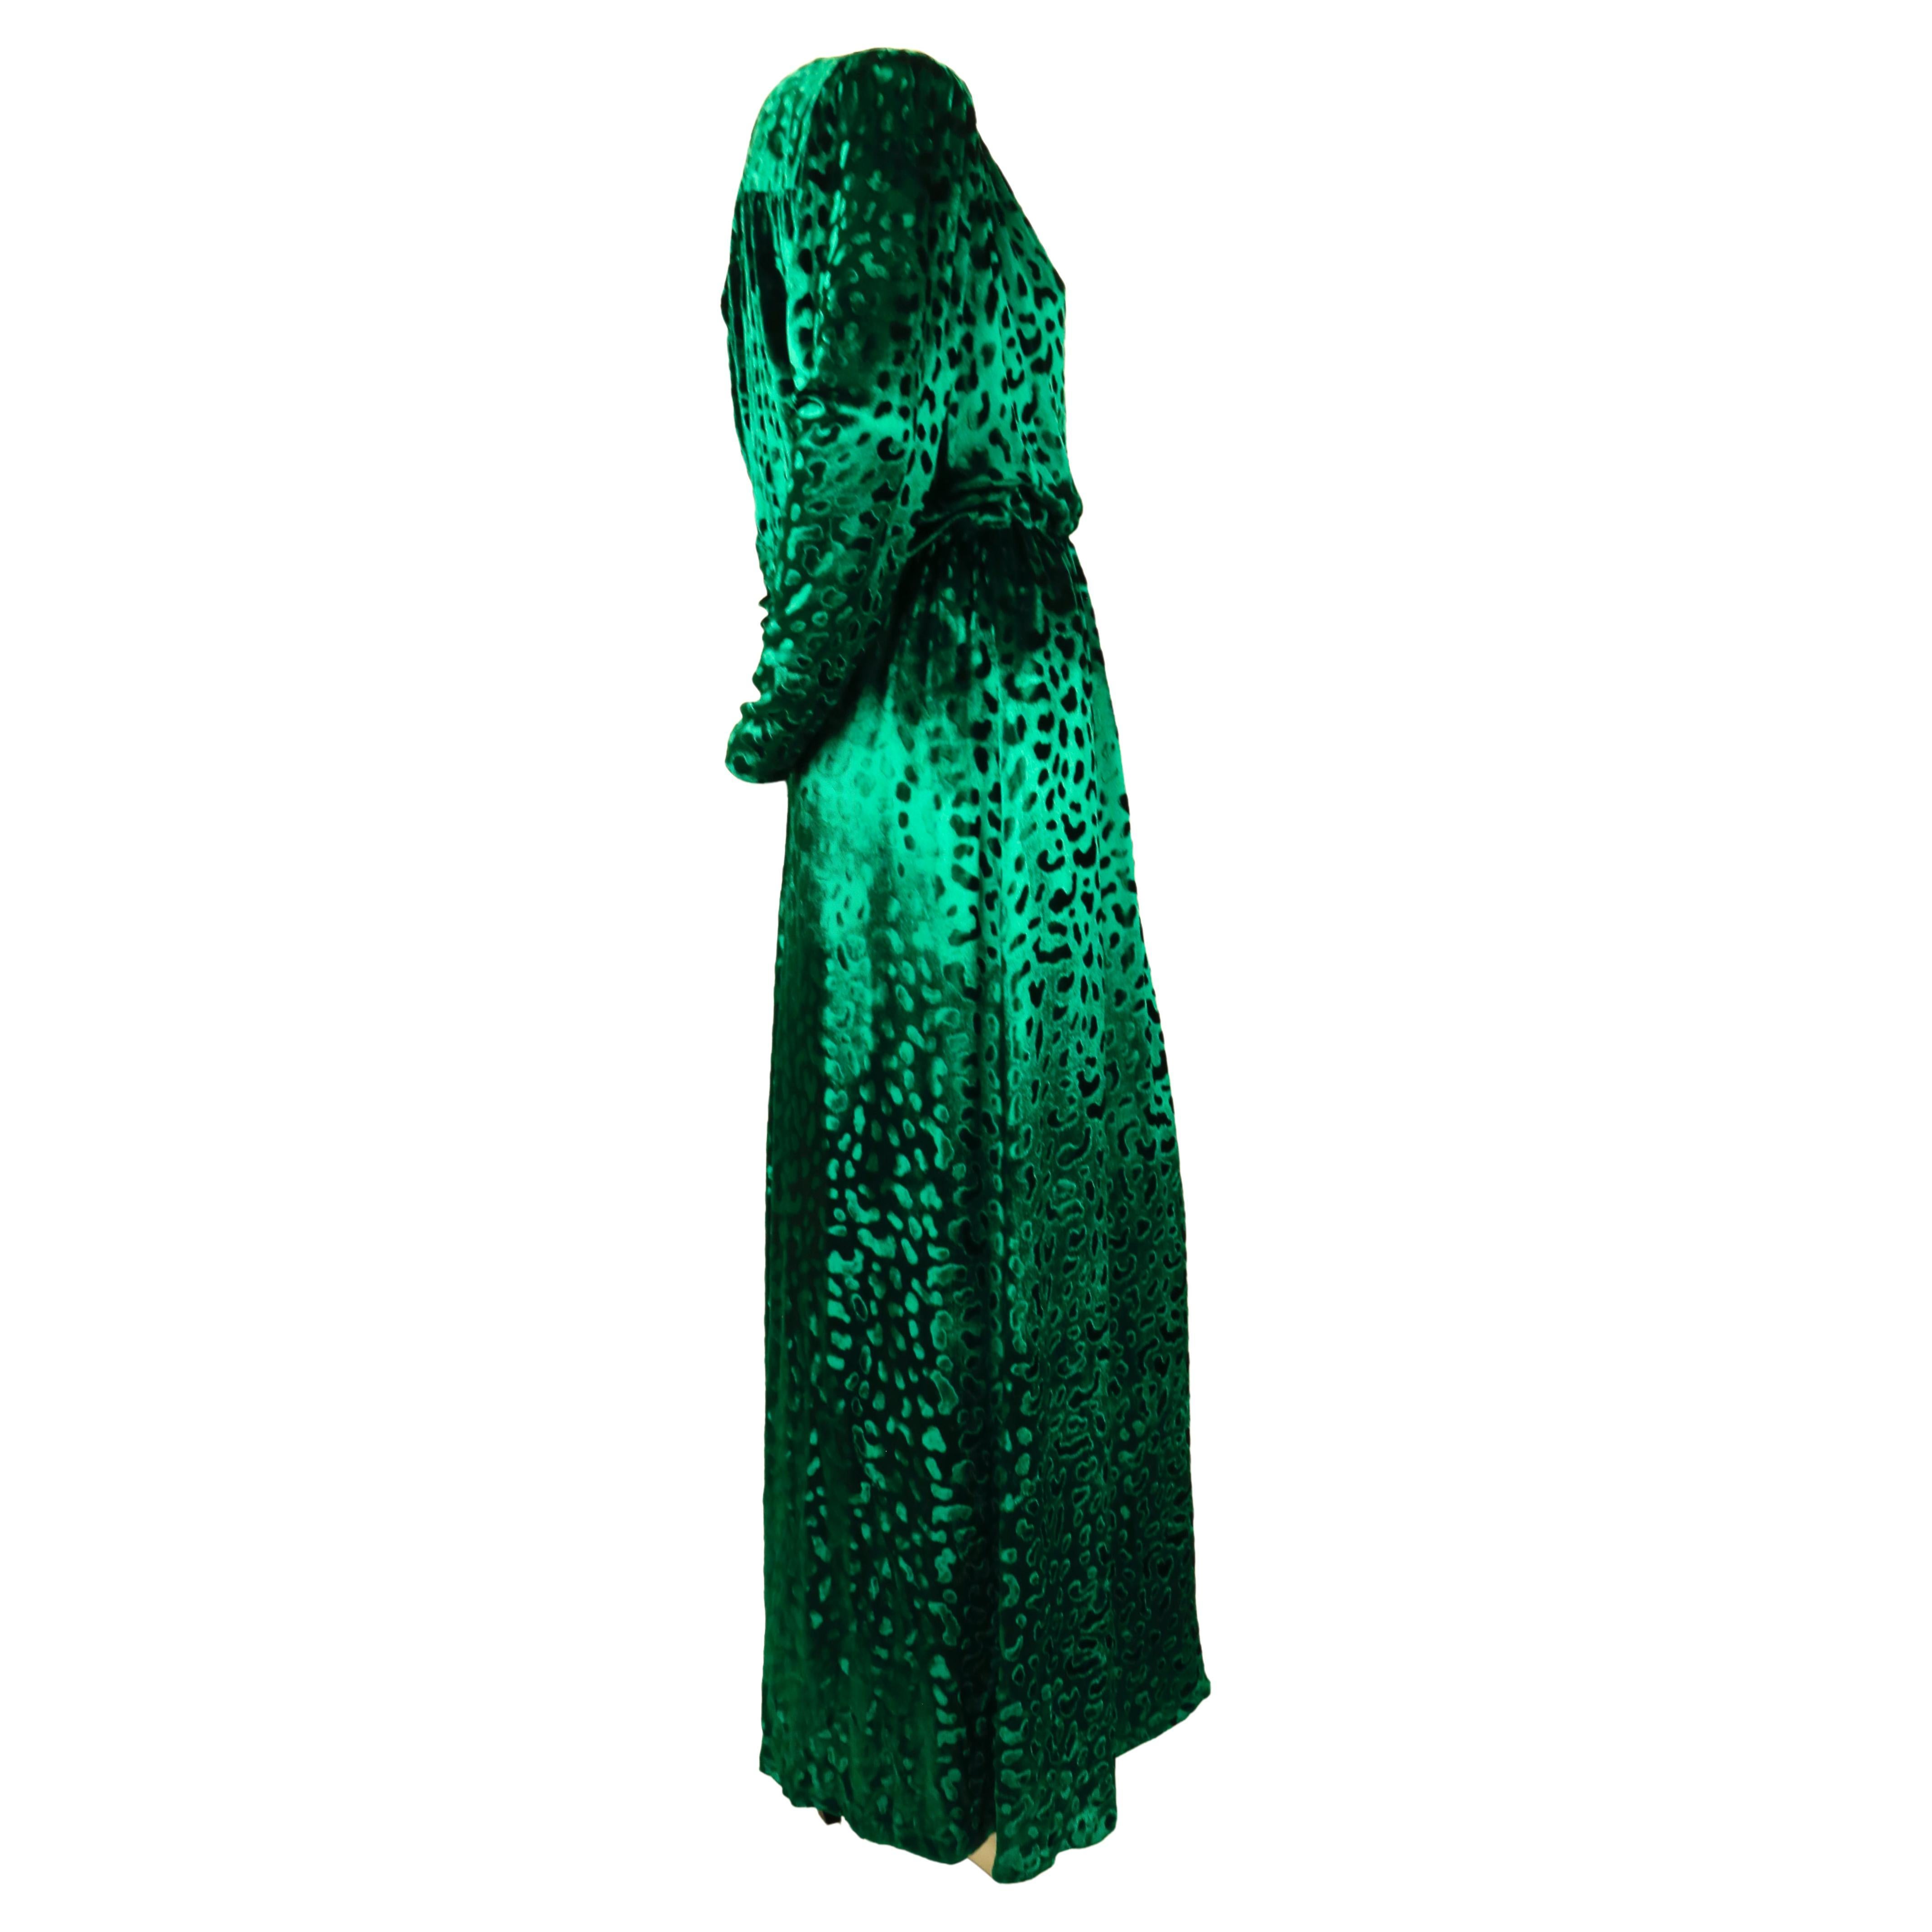 ysl green dress